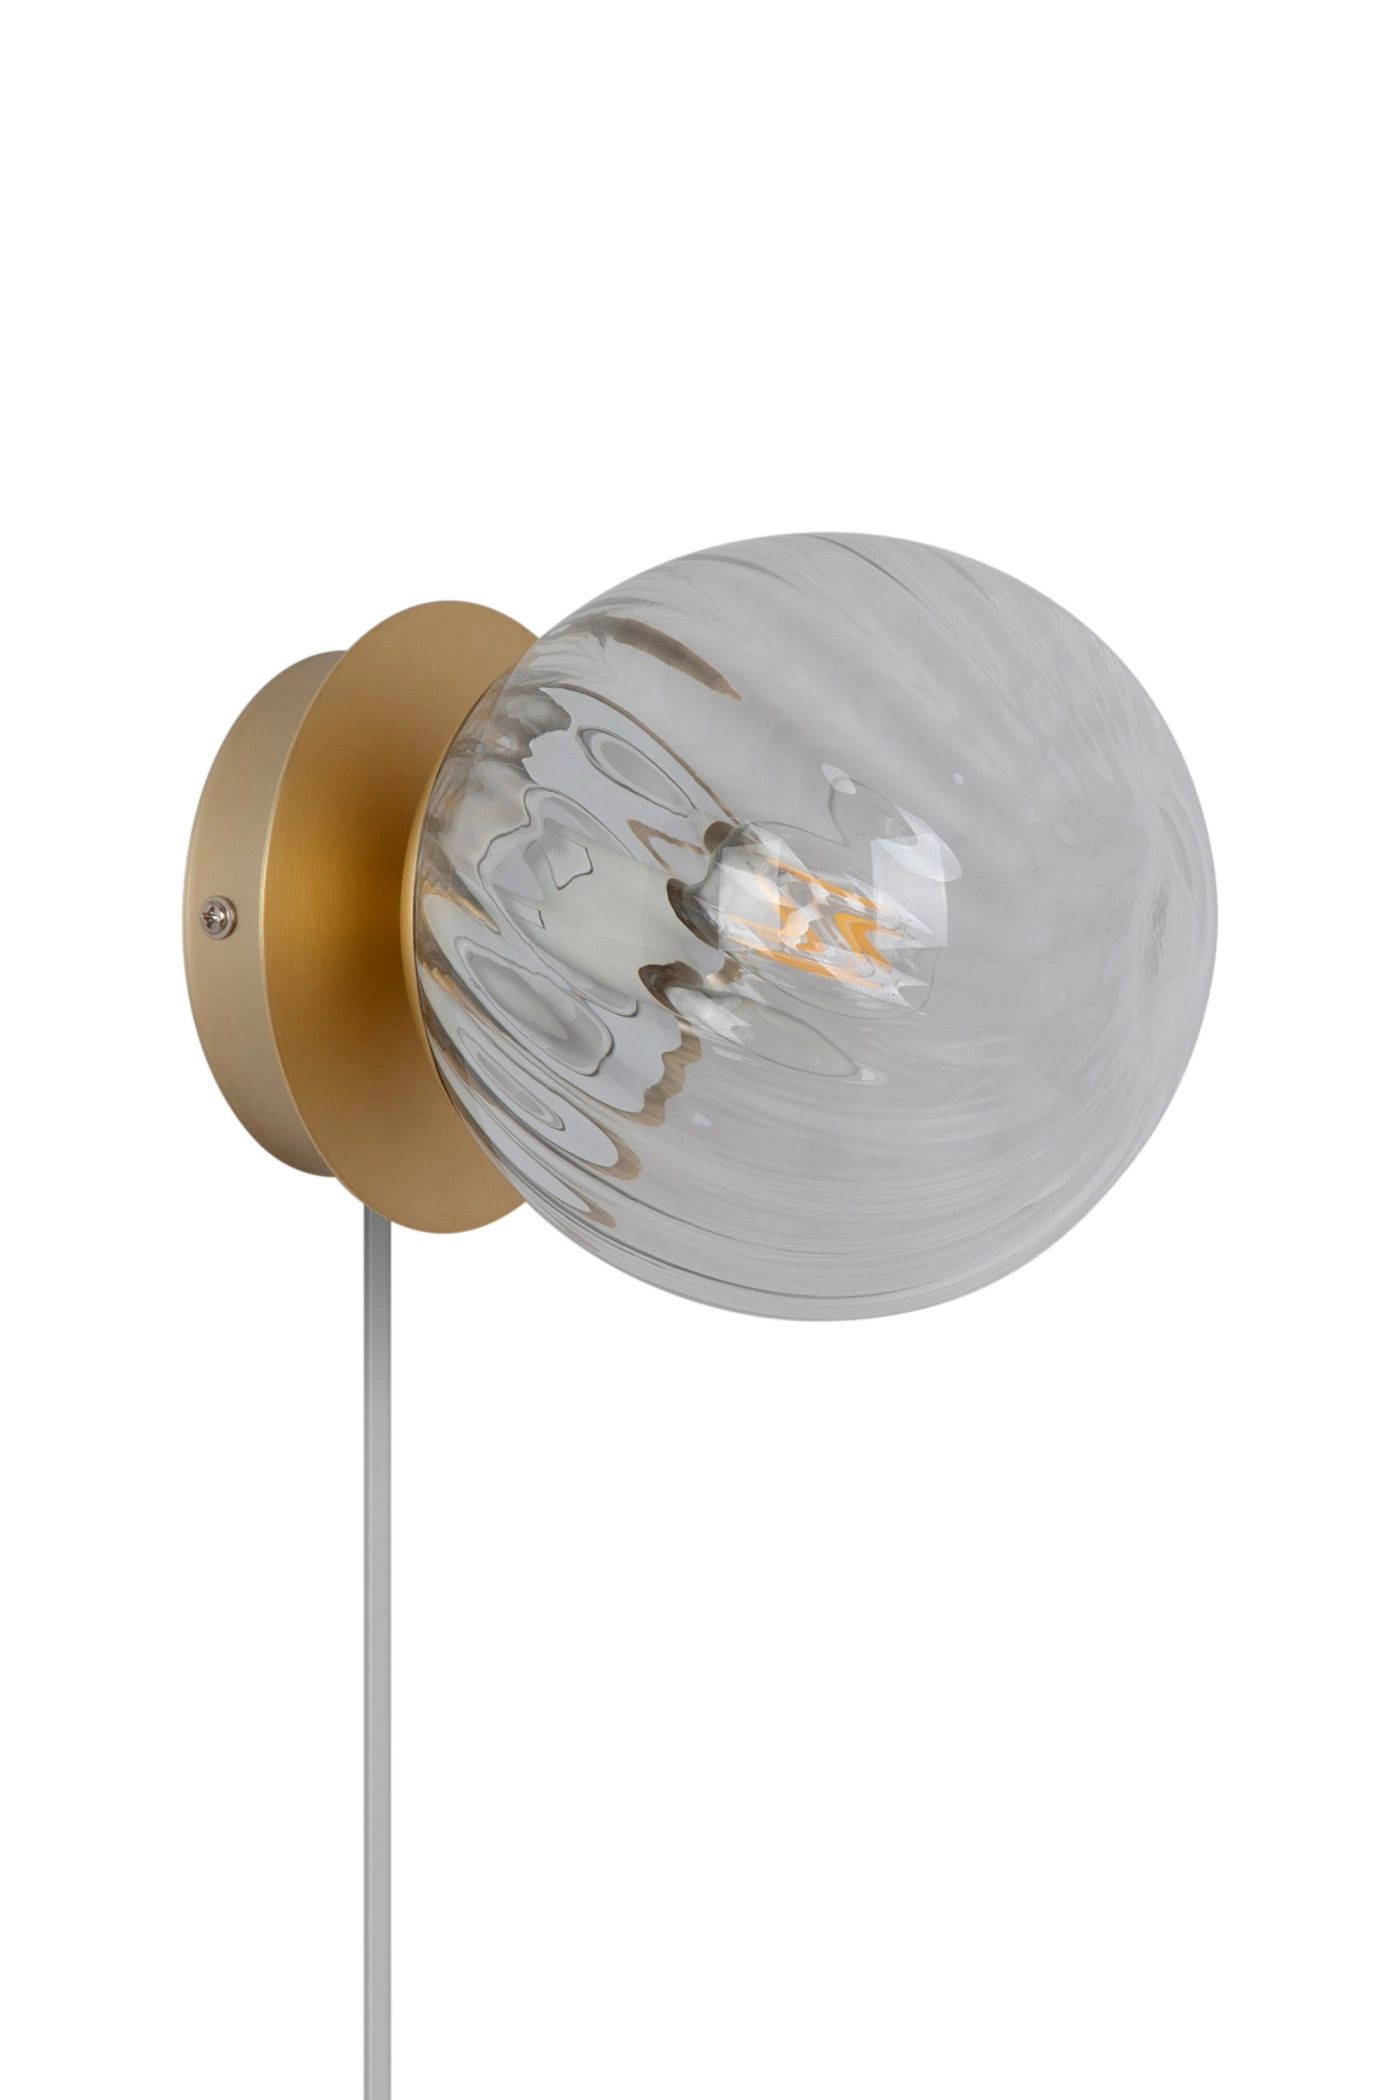   
                        
                        Бра NORDLUX (Дания) 11027    
                         в стиле Классика.  
                        Тип источника света: светодиодная лампа, сменная.                                                 Цвета плафонов и подвесок: Прозрачный.                         Материал: Стекло.                          фото 1